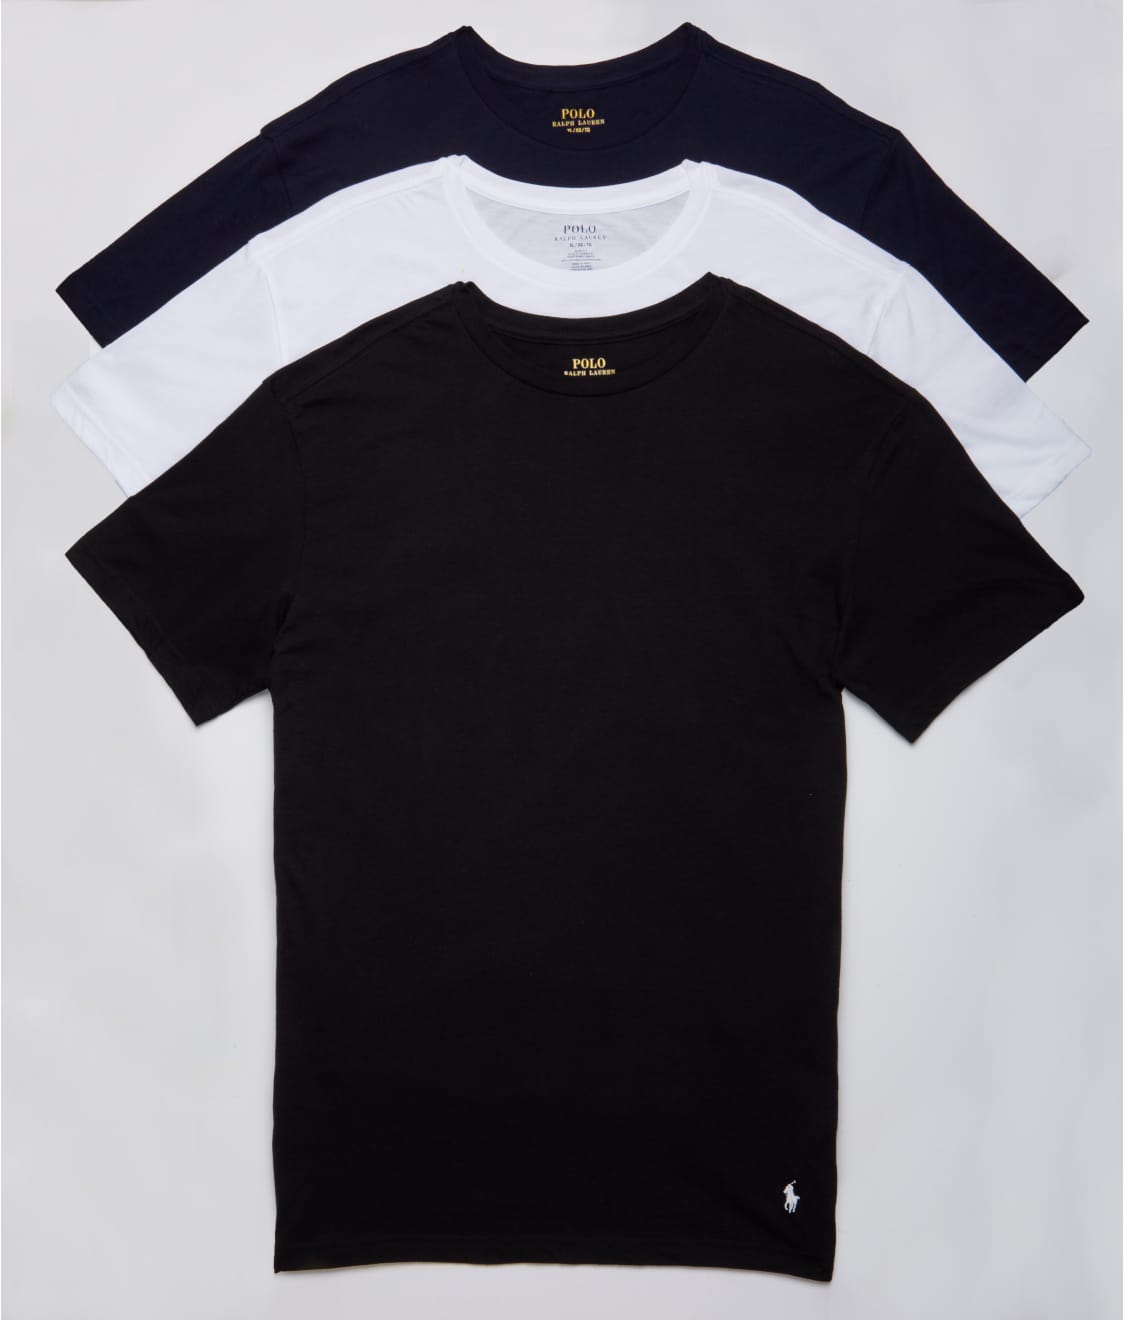 Polo Ralph Lauren: Classic Fit Cotton T-Shirt 3-Pack RCCNP3